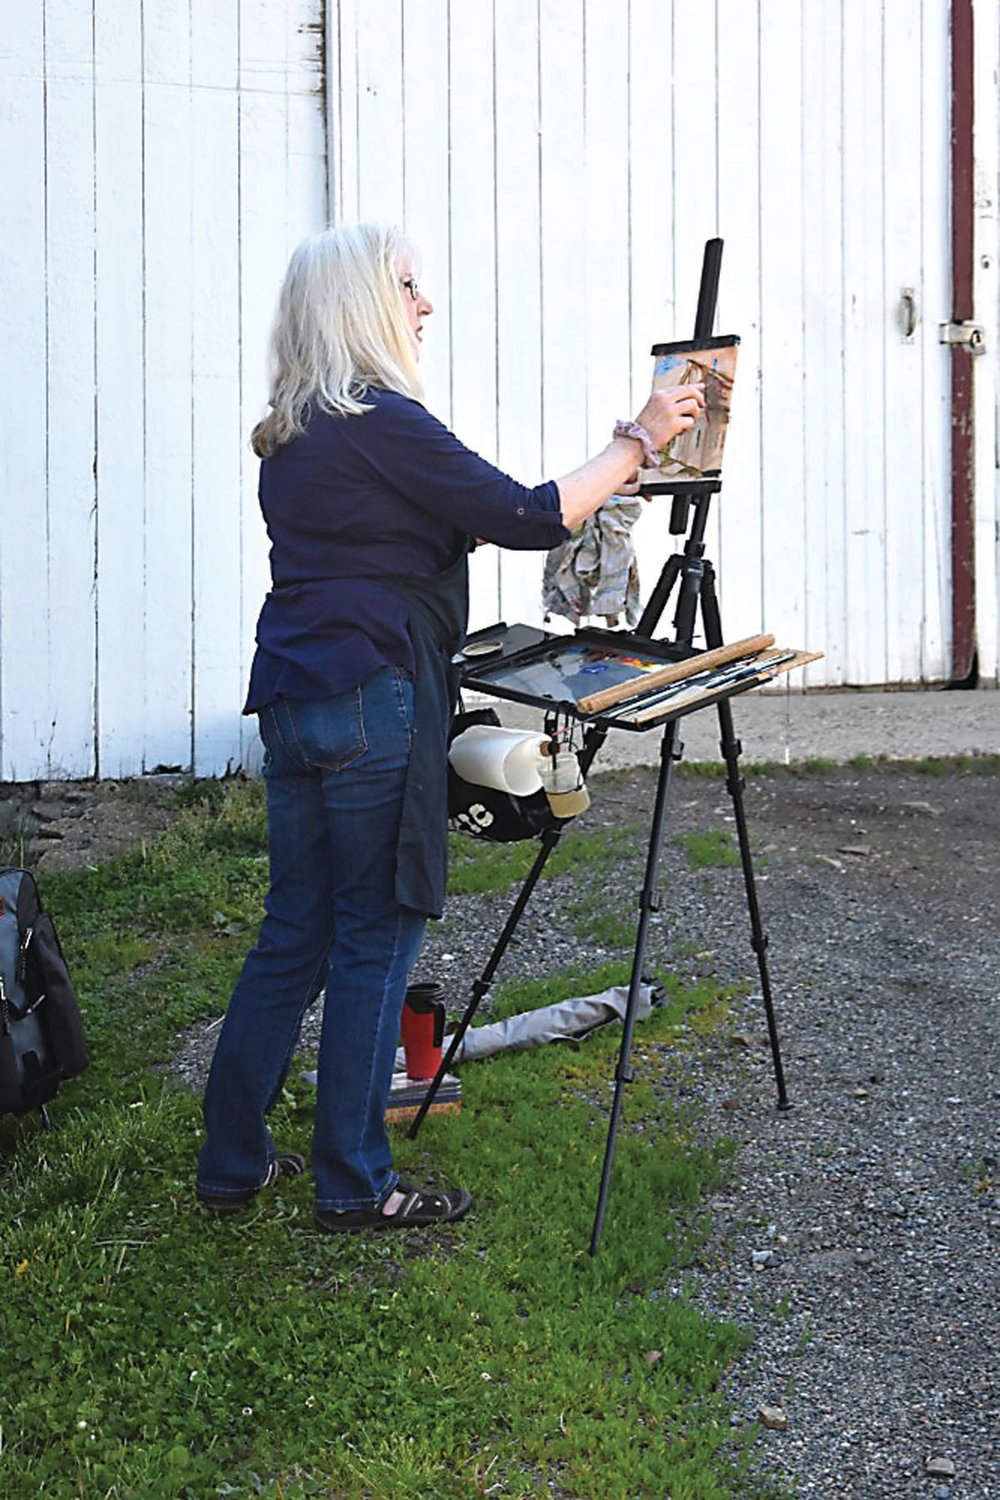 Helen Lee Meyers paints “en plein air,” meaning outdoors.